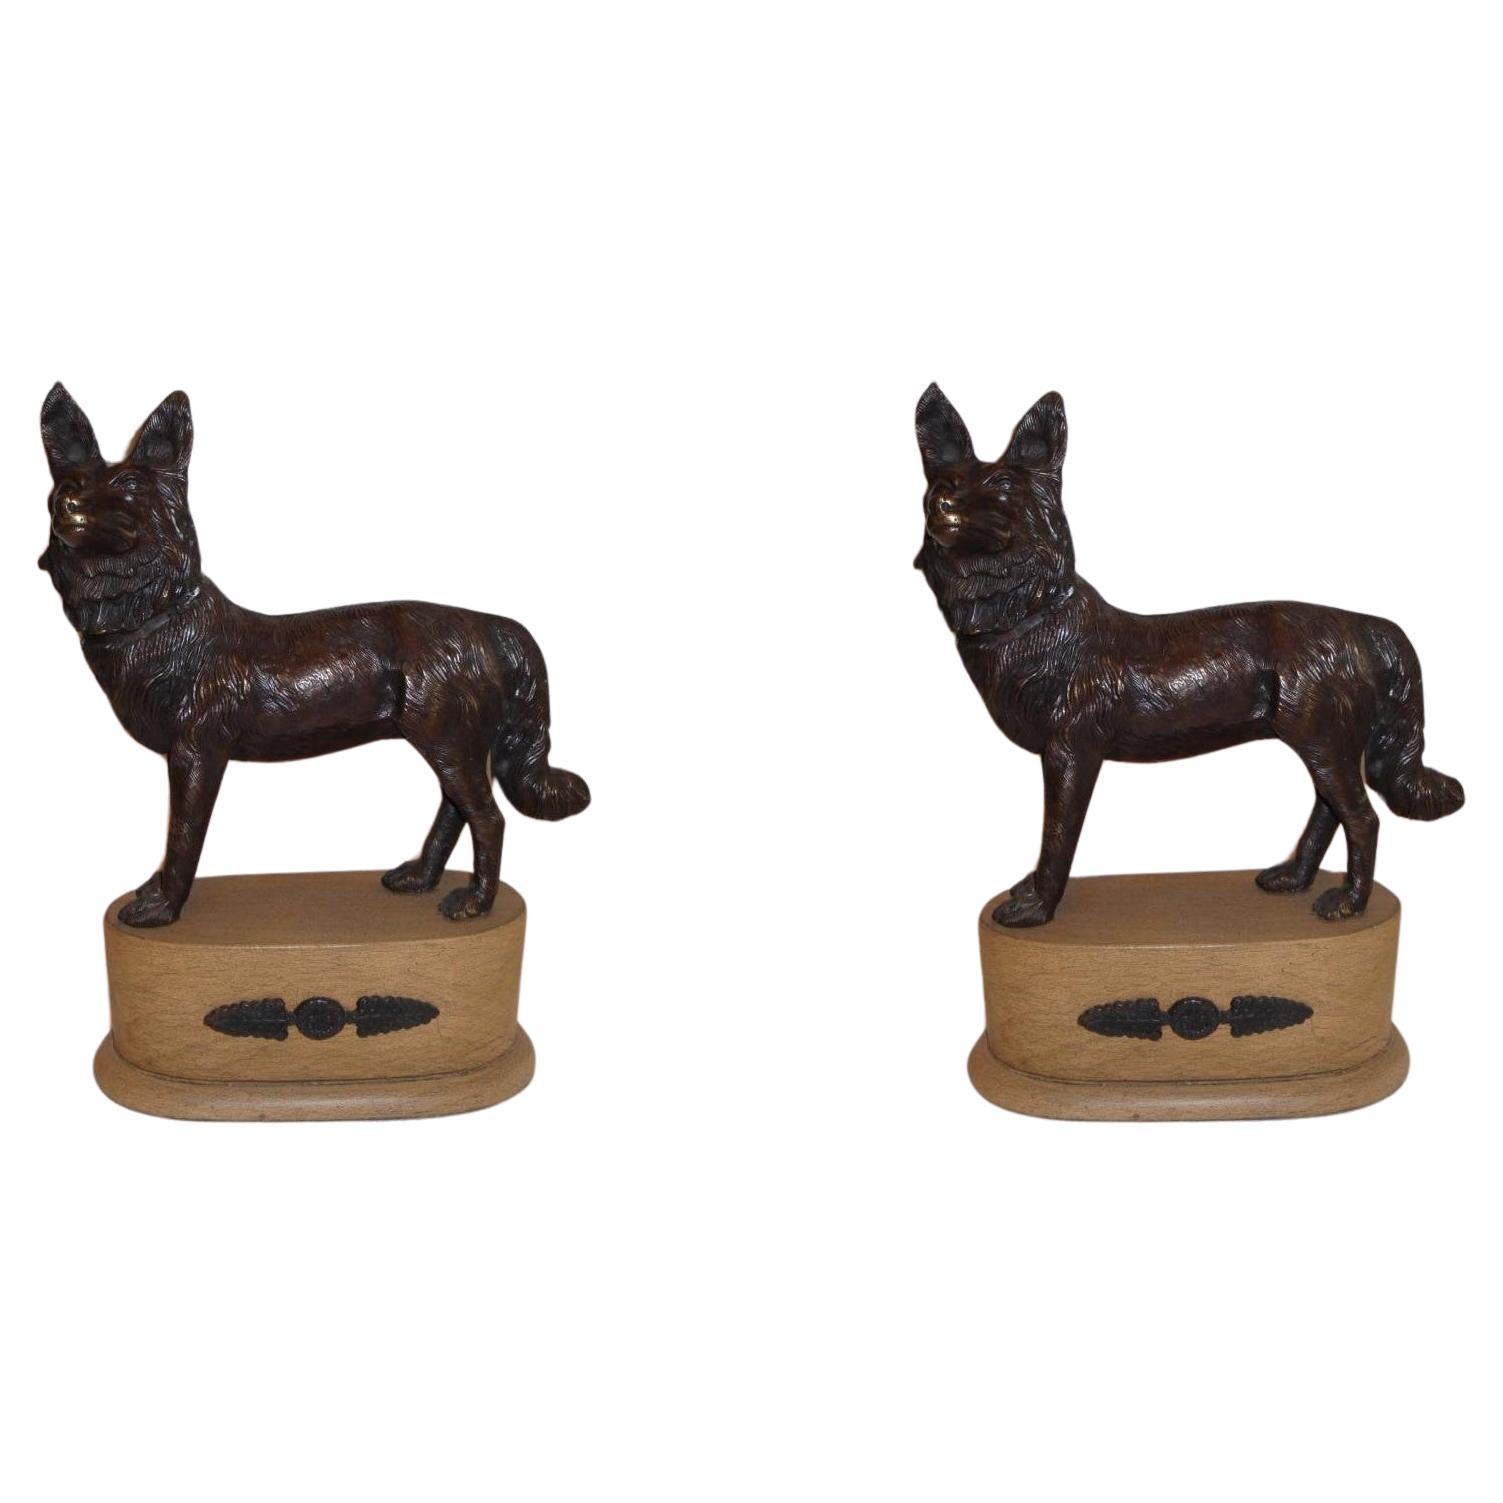 Seltenes Paar großer Bronze-Grauerhund-Statue-Skulptur/Türstopper-Holzsockel mit Holzsockel